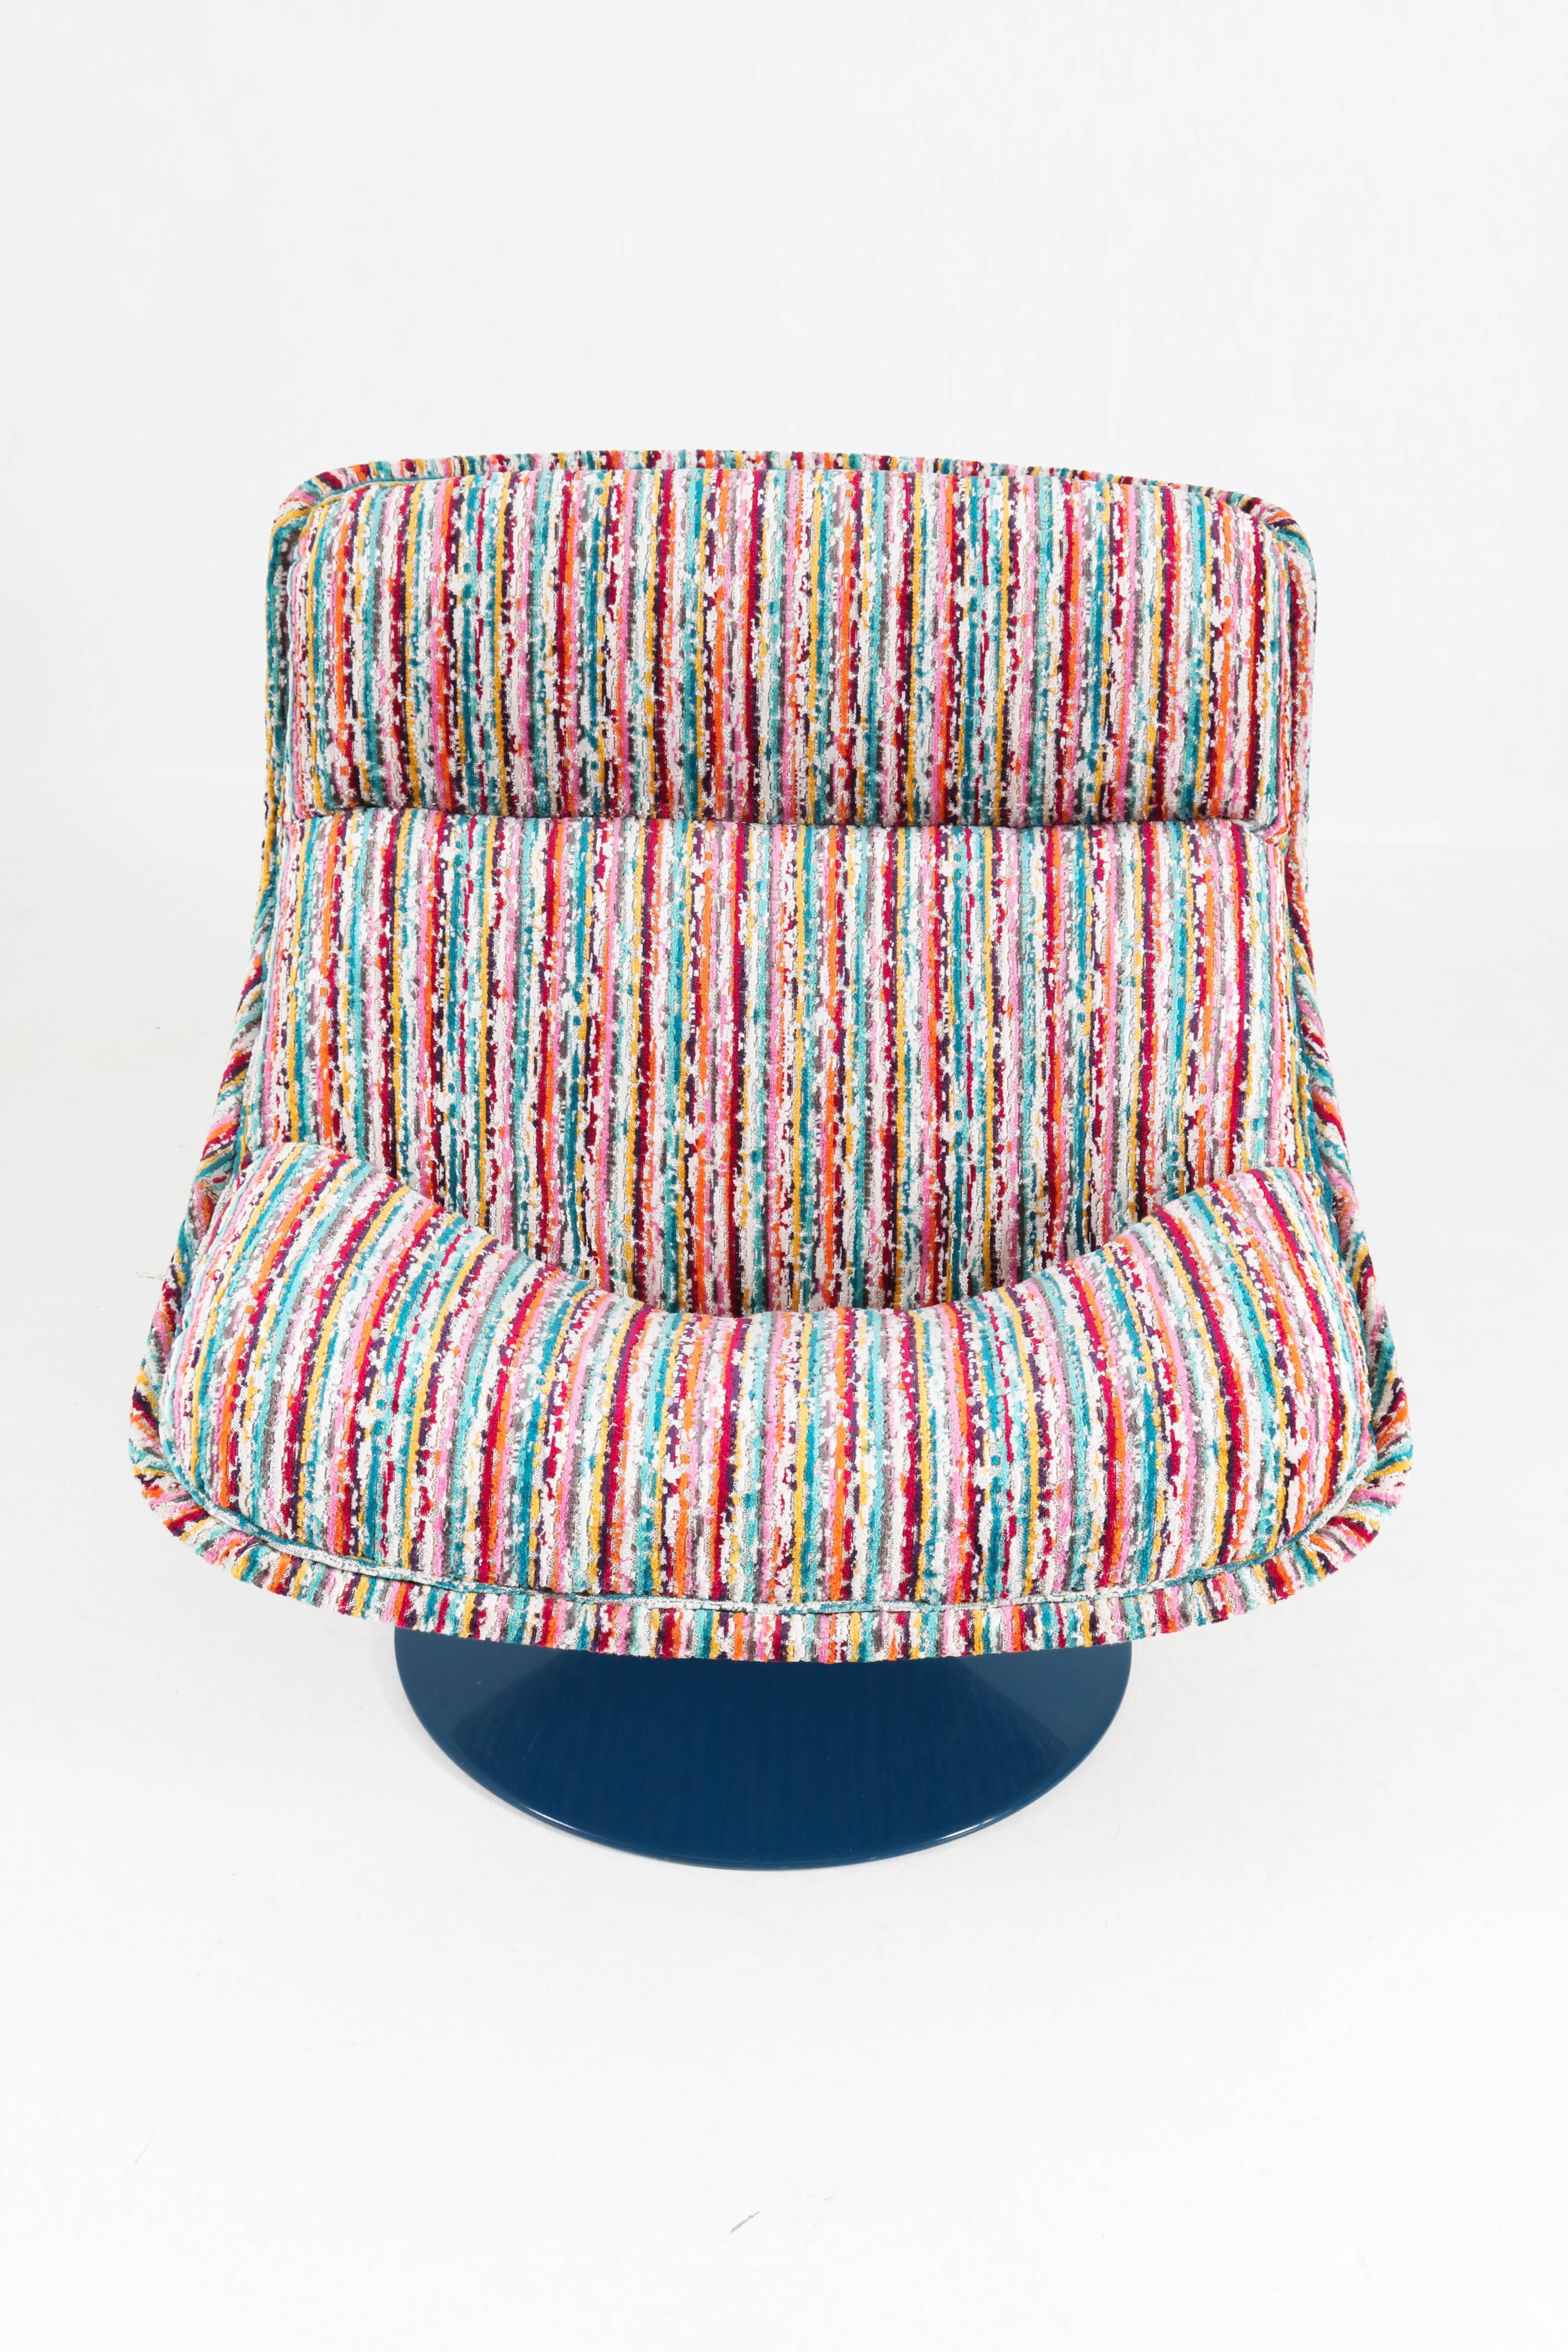 Mid-Century Modern Swivel Chair Model F518 by Geoffrey Harcourt for Artifort 2